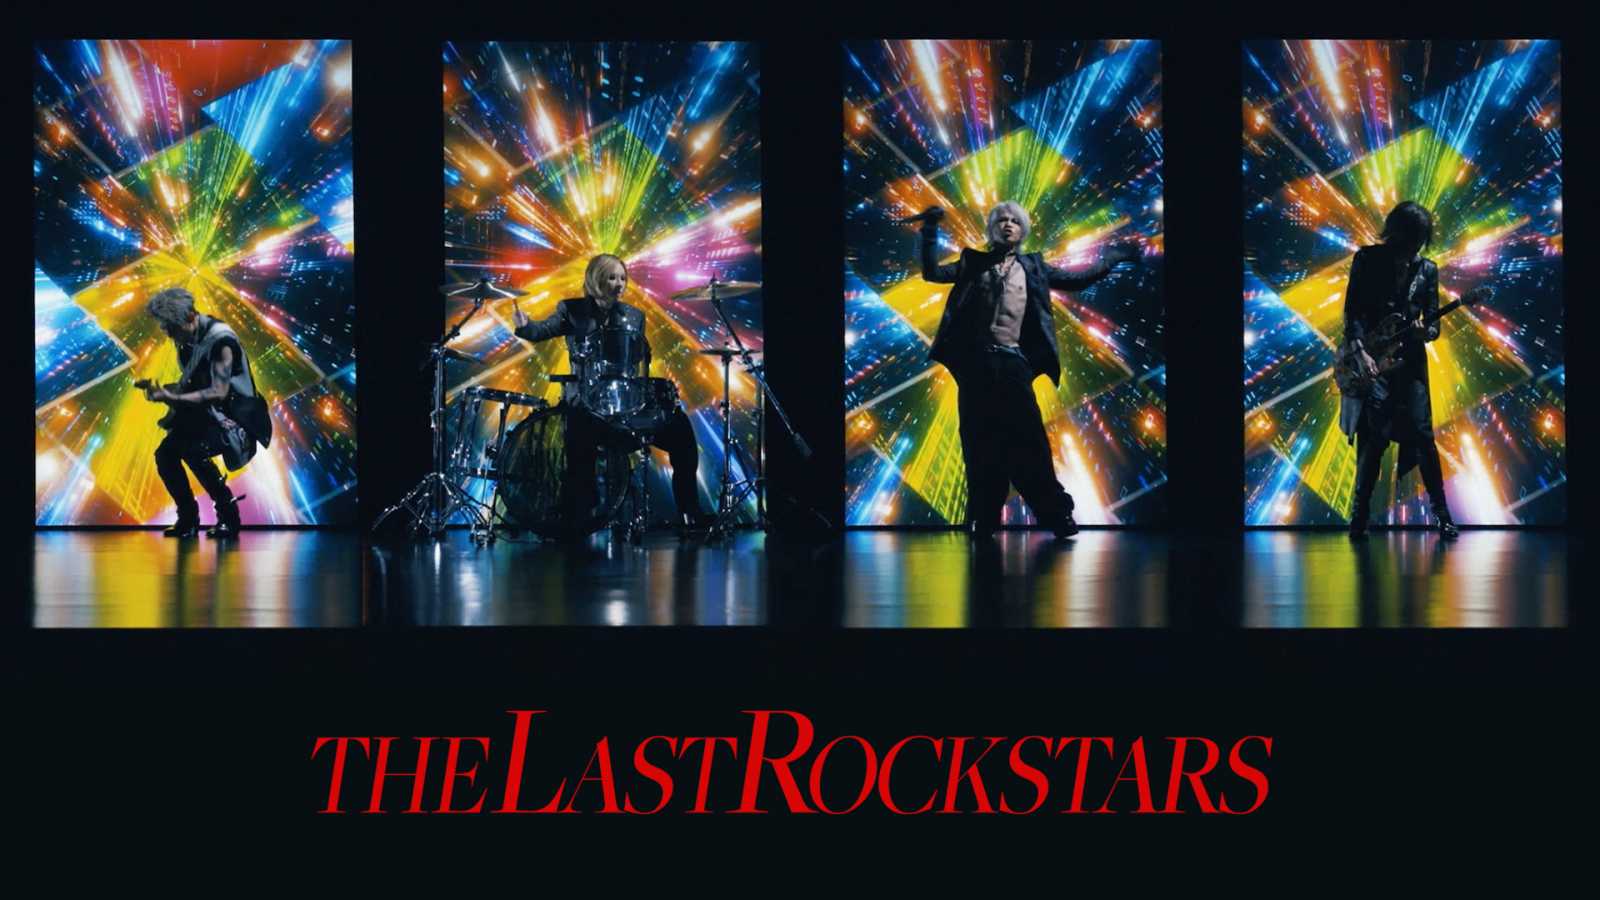 THE LAST ROCKSTARS revela o MV de "The Last Rockstars (Paris Mix)" © THE LAST ROCKSTARS. All rights reserved.